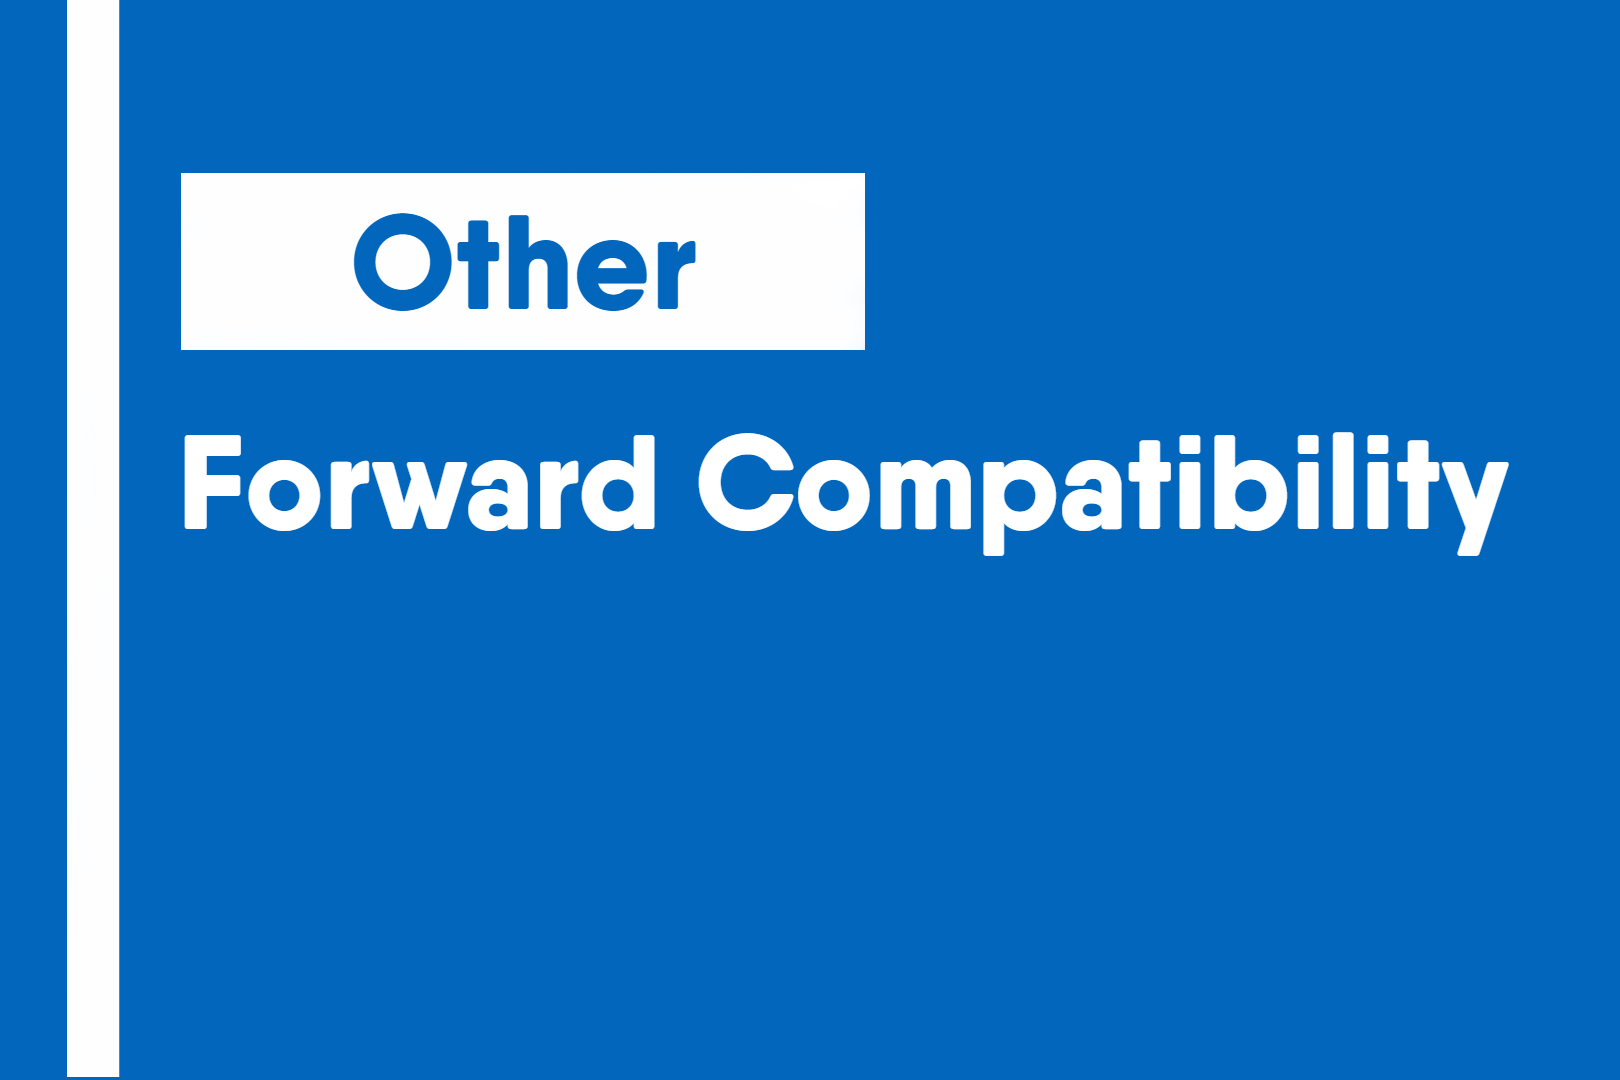 Forward Compatibility